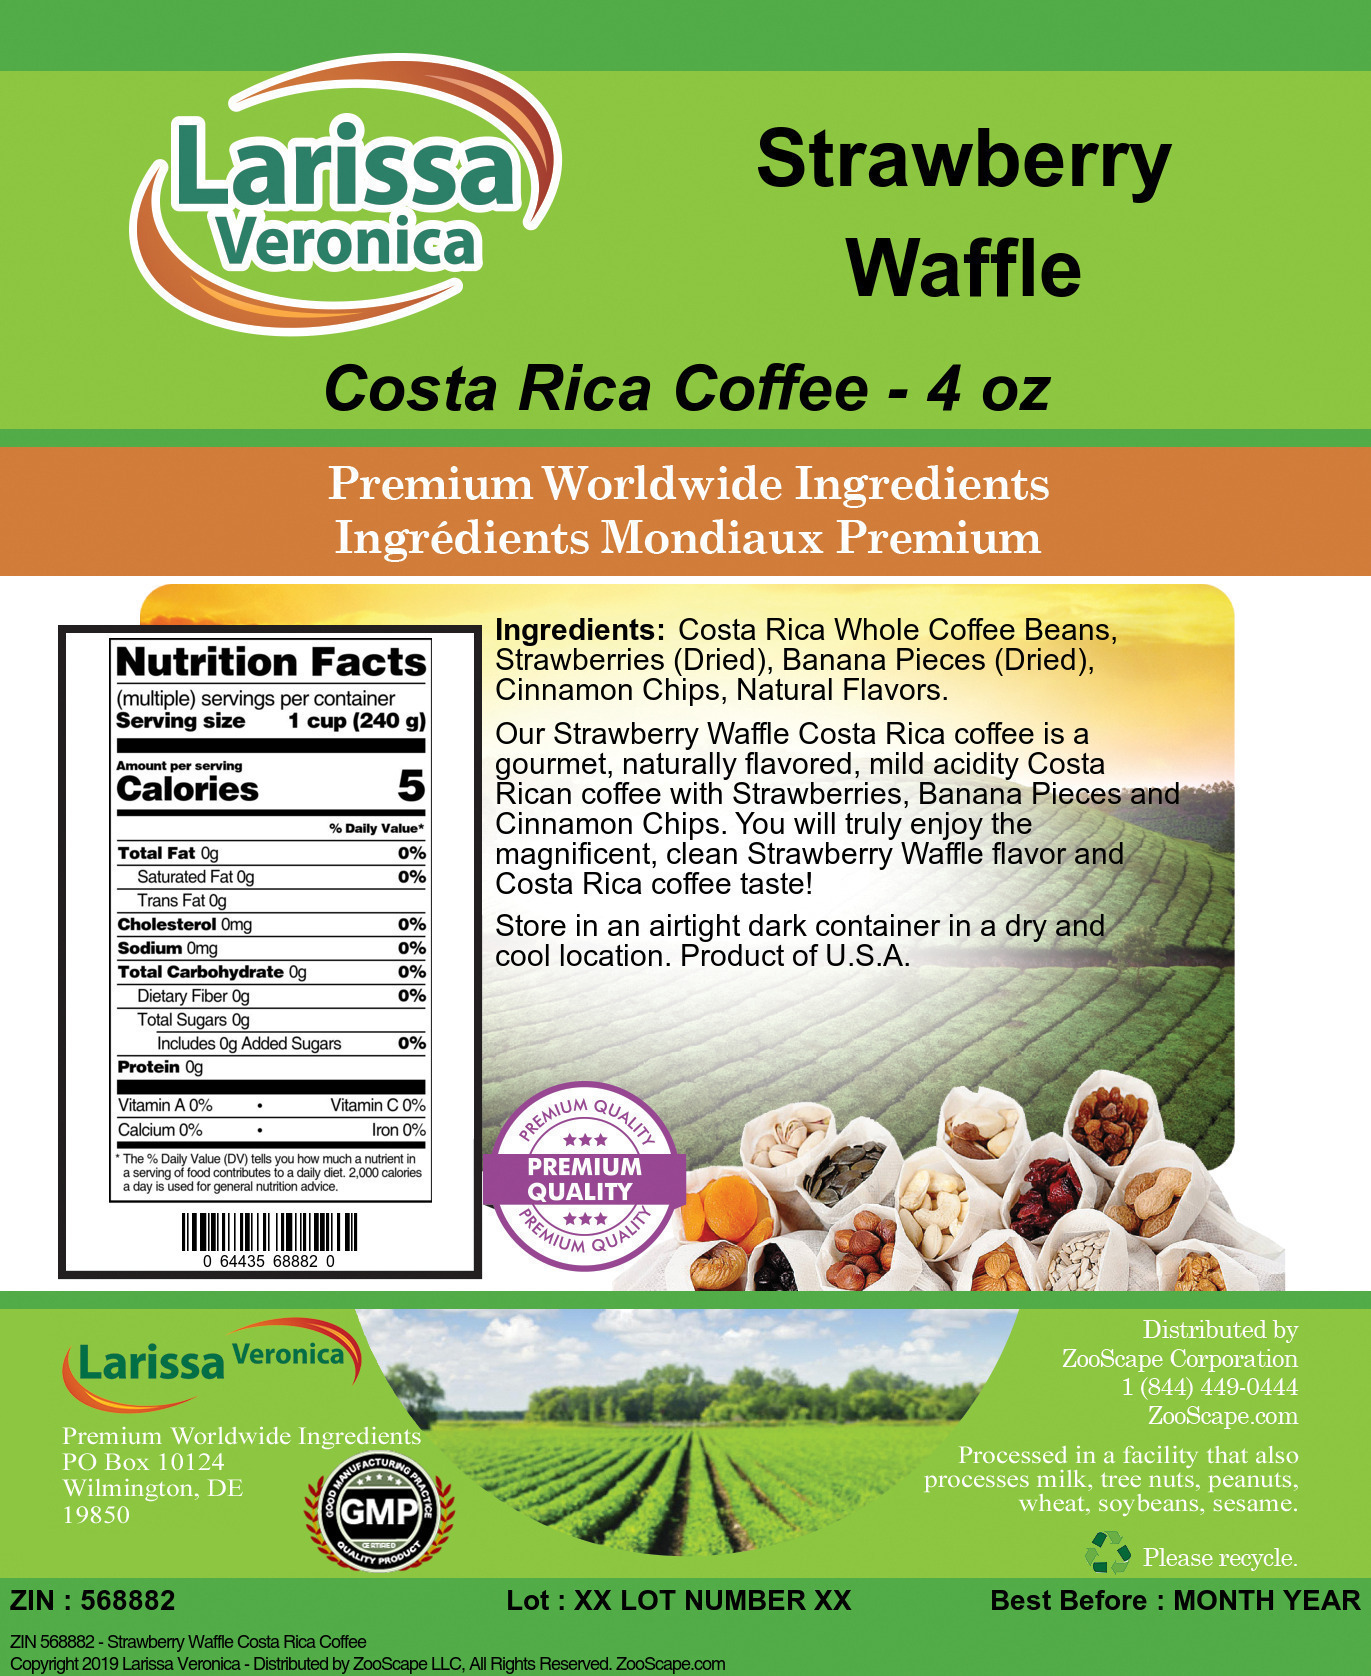 Strawberry Waffle Costa Rica Coffee - Label